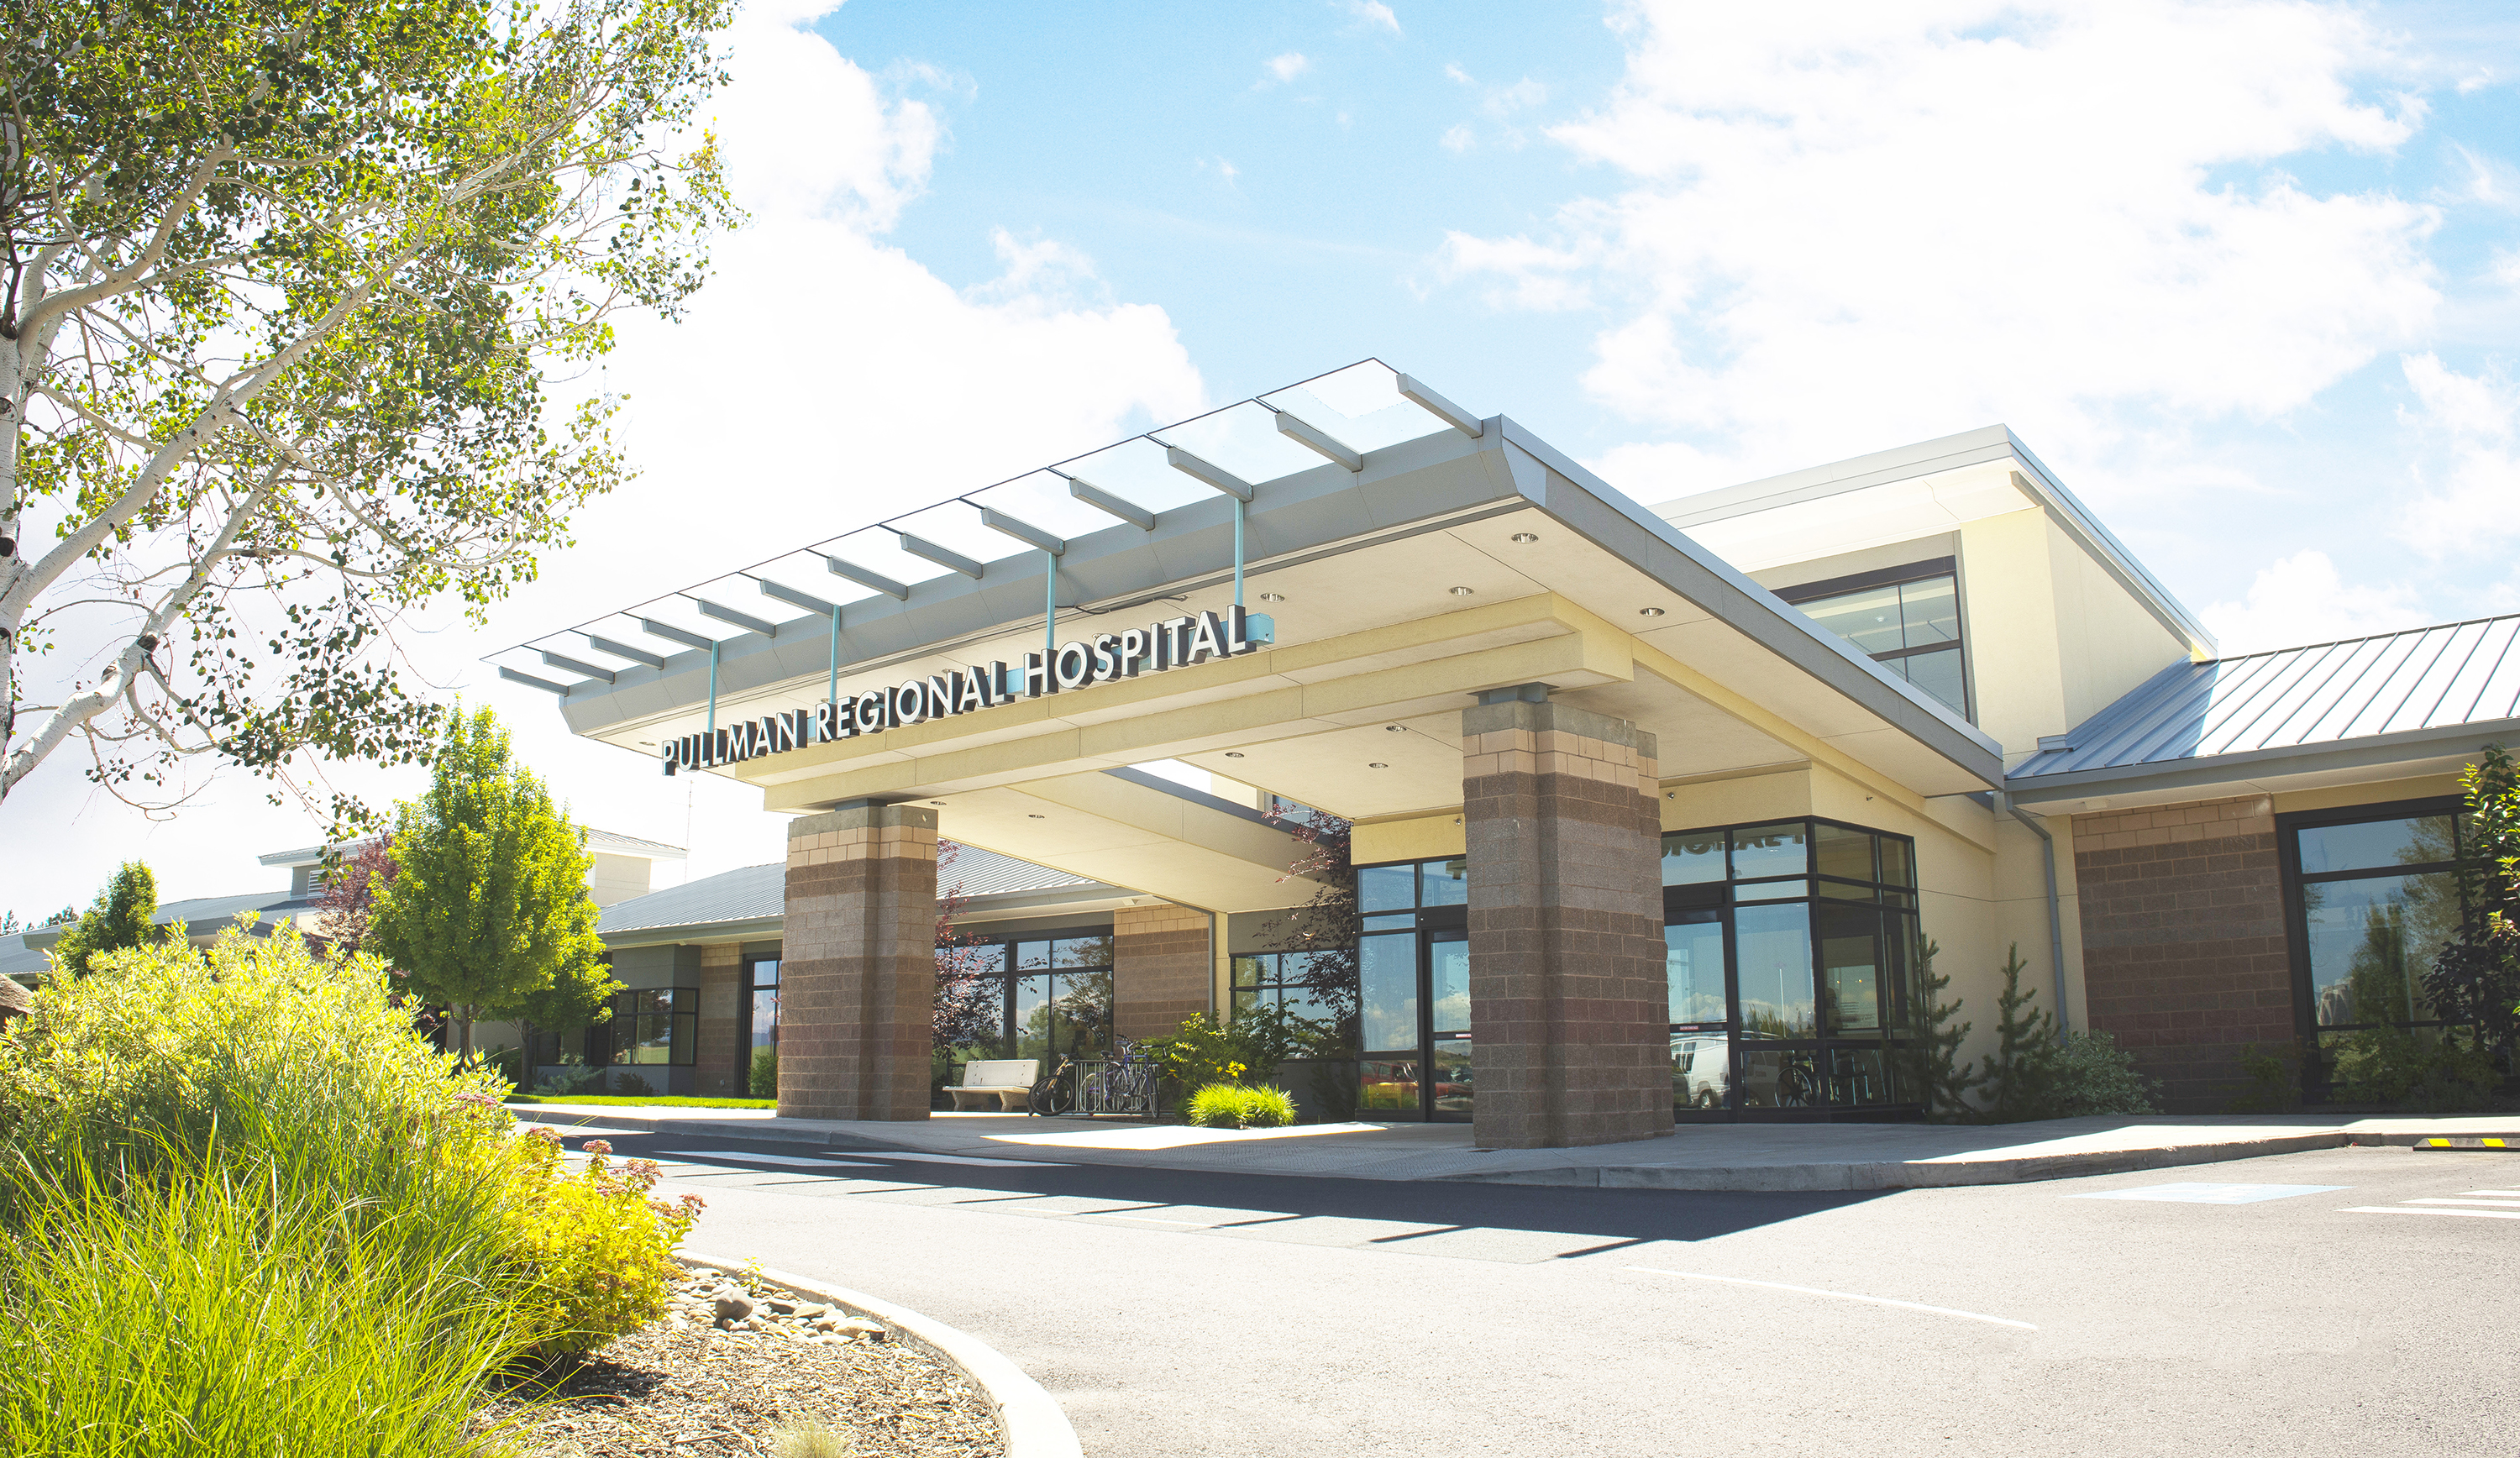 Pullman Regional Hospital Board of Commissioners Seeks to Fill Vacancy